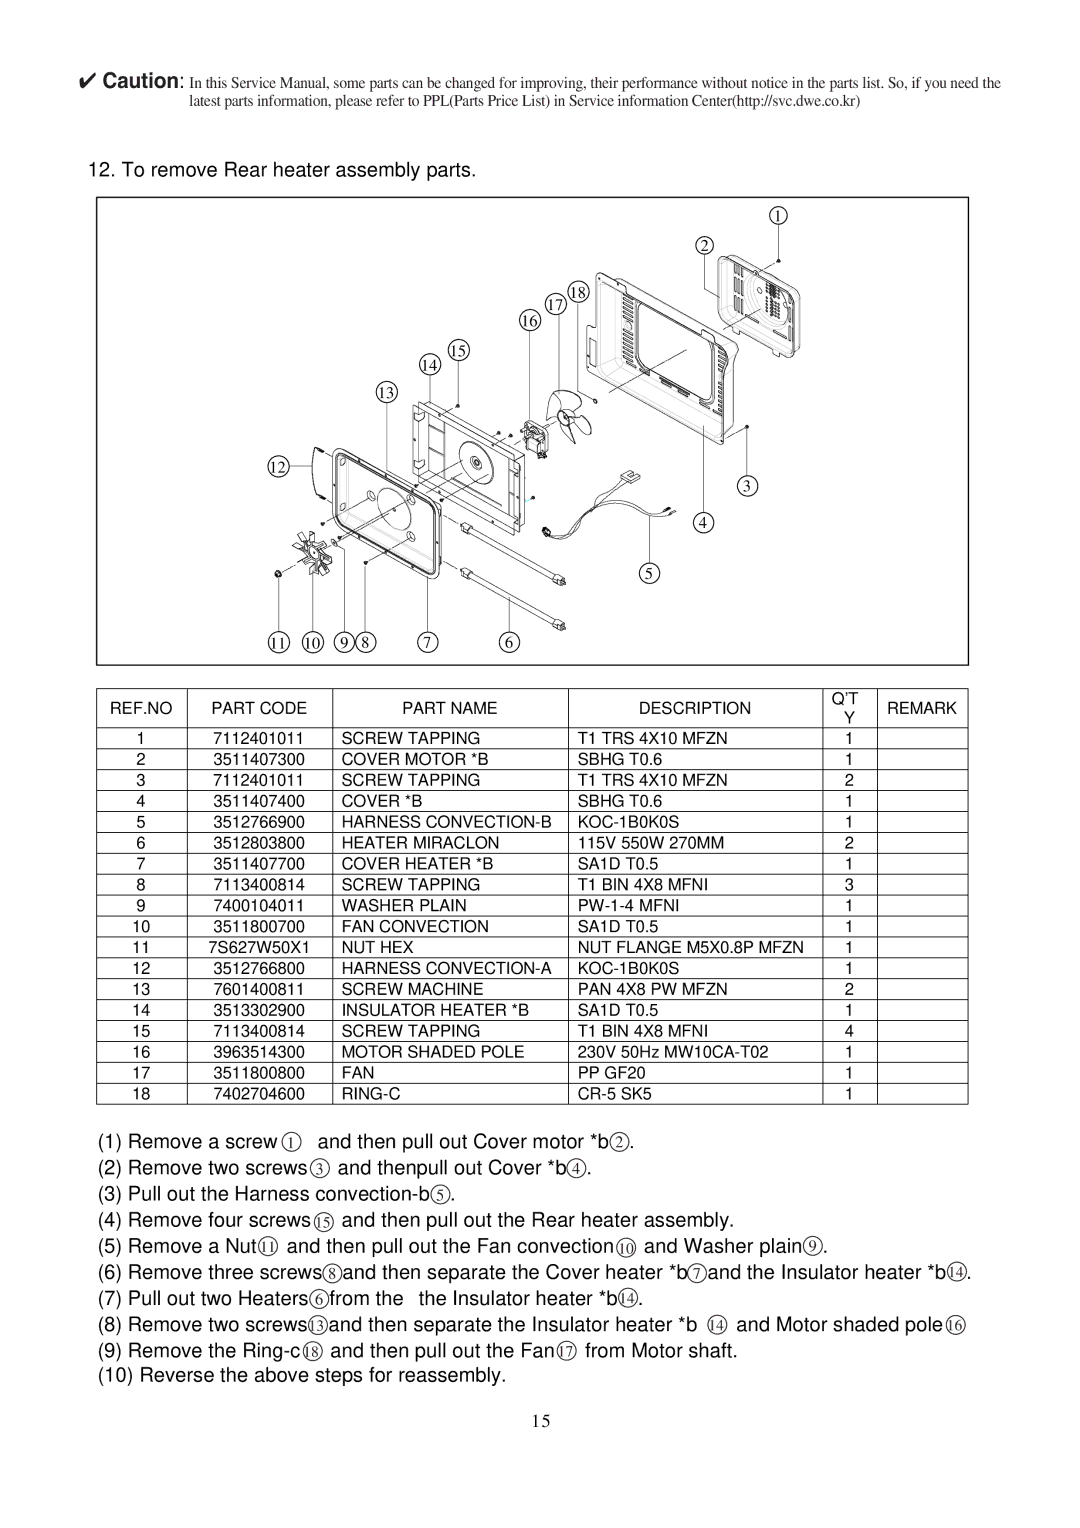 Daewoo KOC-1B0K0S service manual To remove Rear heater assembly parts 